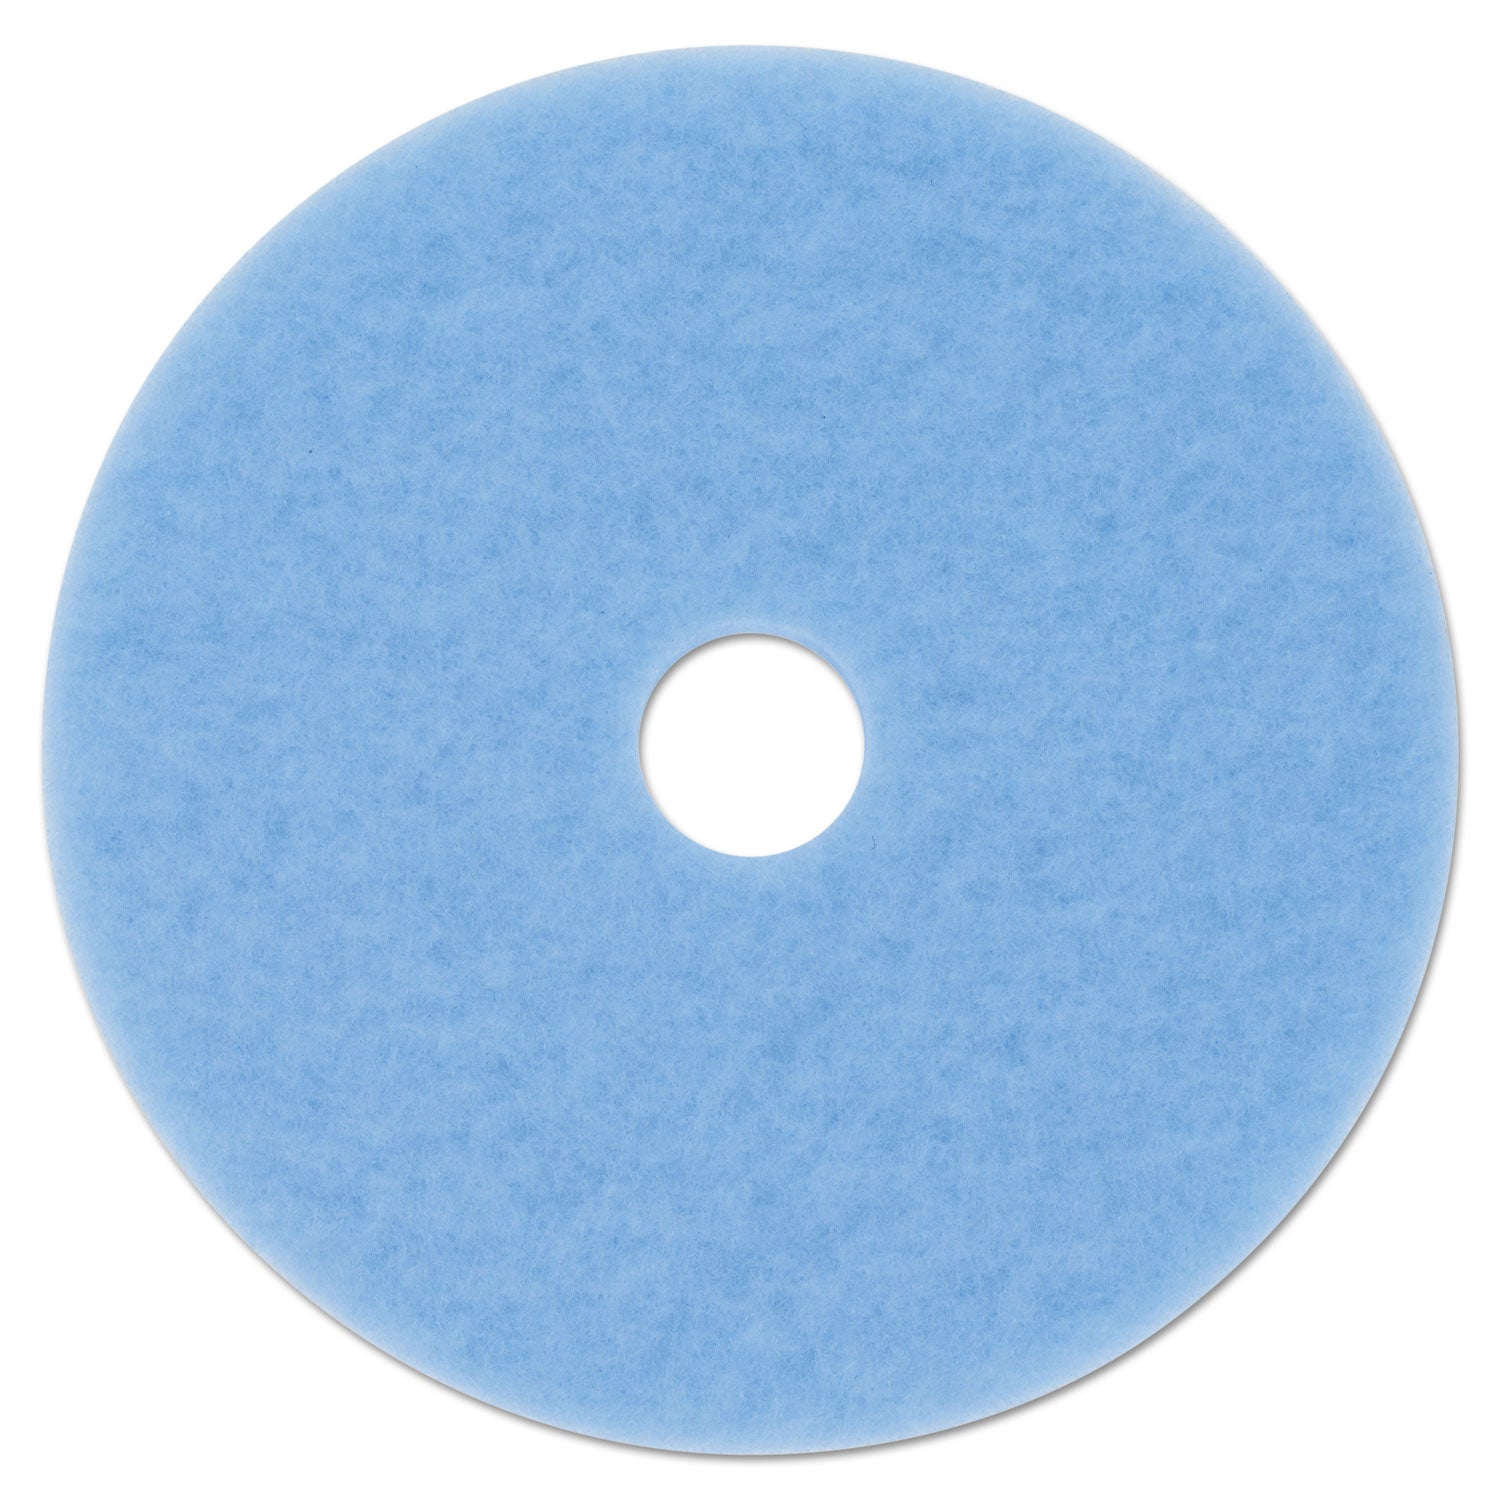 hi-performance-burnish-pad-3050-27-diameter-sky-blue-5-carton_mmm59824 - 1